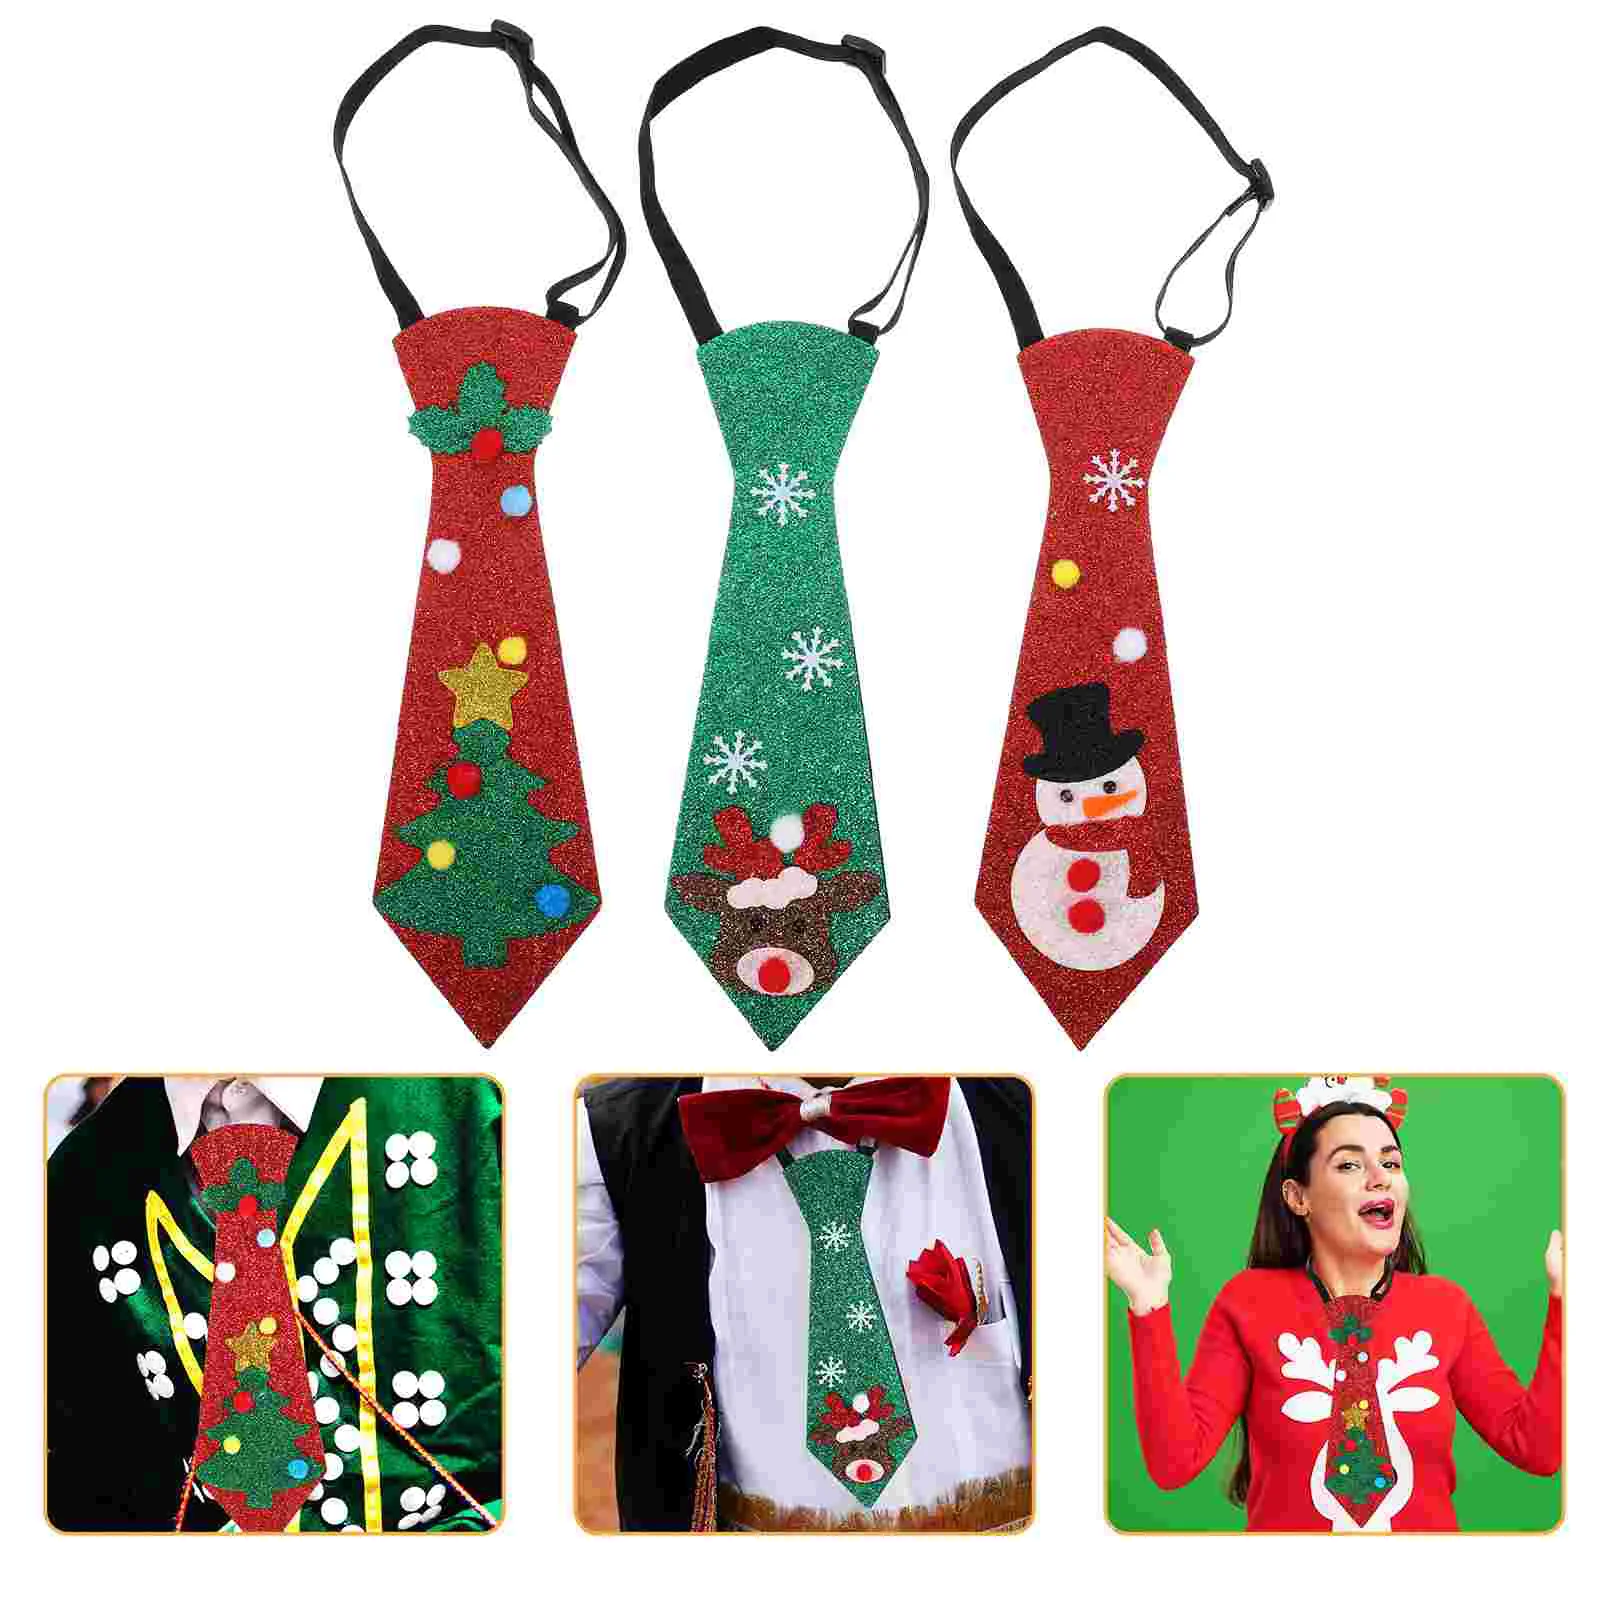 

3 Pcs Christmas Ties Neck Decor Party Decorations Decorative Necktie Xmas Glitter Paper Cosplay